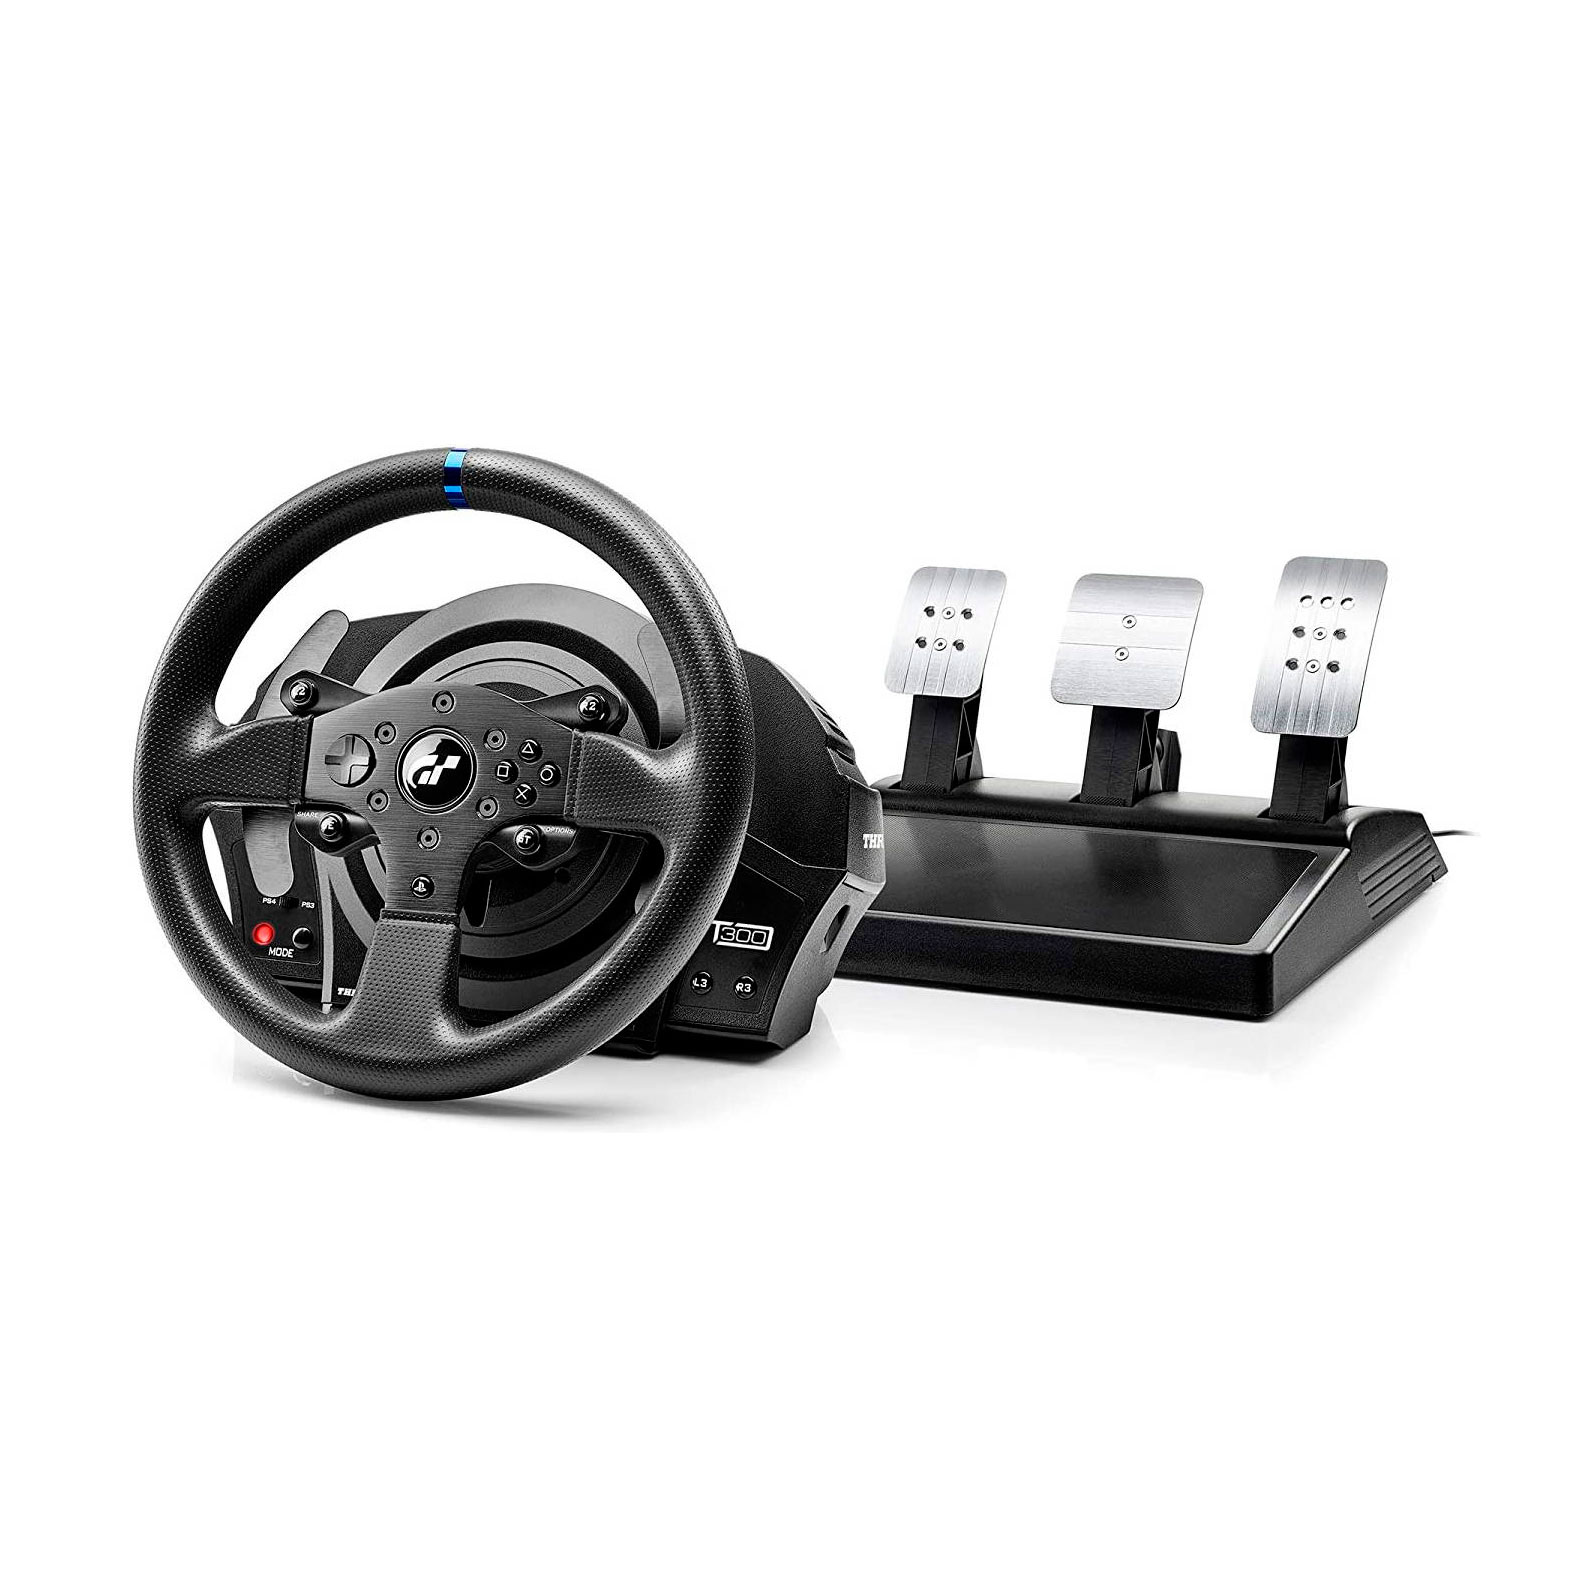 Руль Thrustmaster T300RS GT черный speed meter for thrustmaster t300rs gt tspc 599 racing car game modification on steering wheel